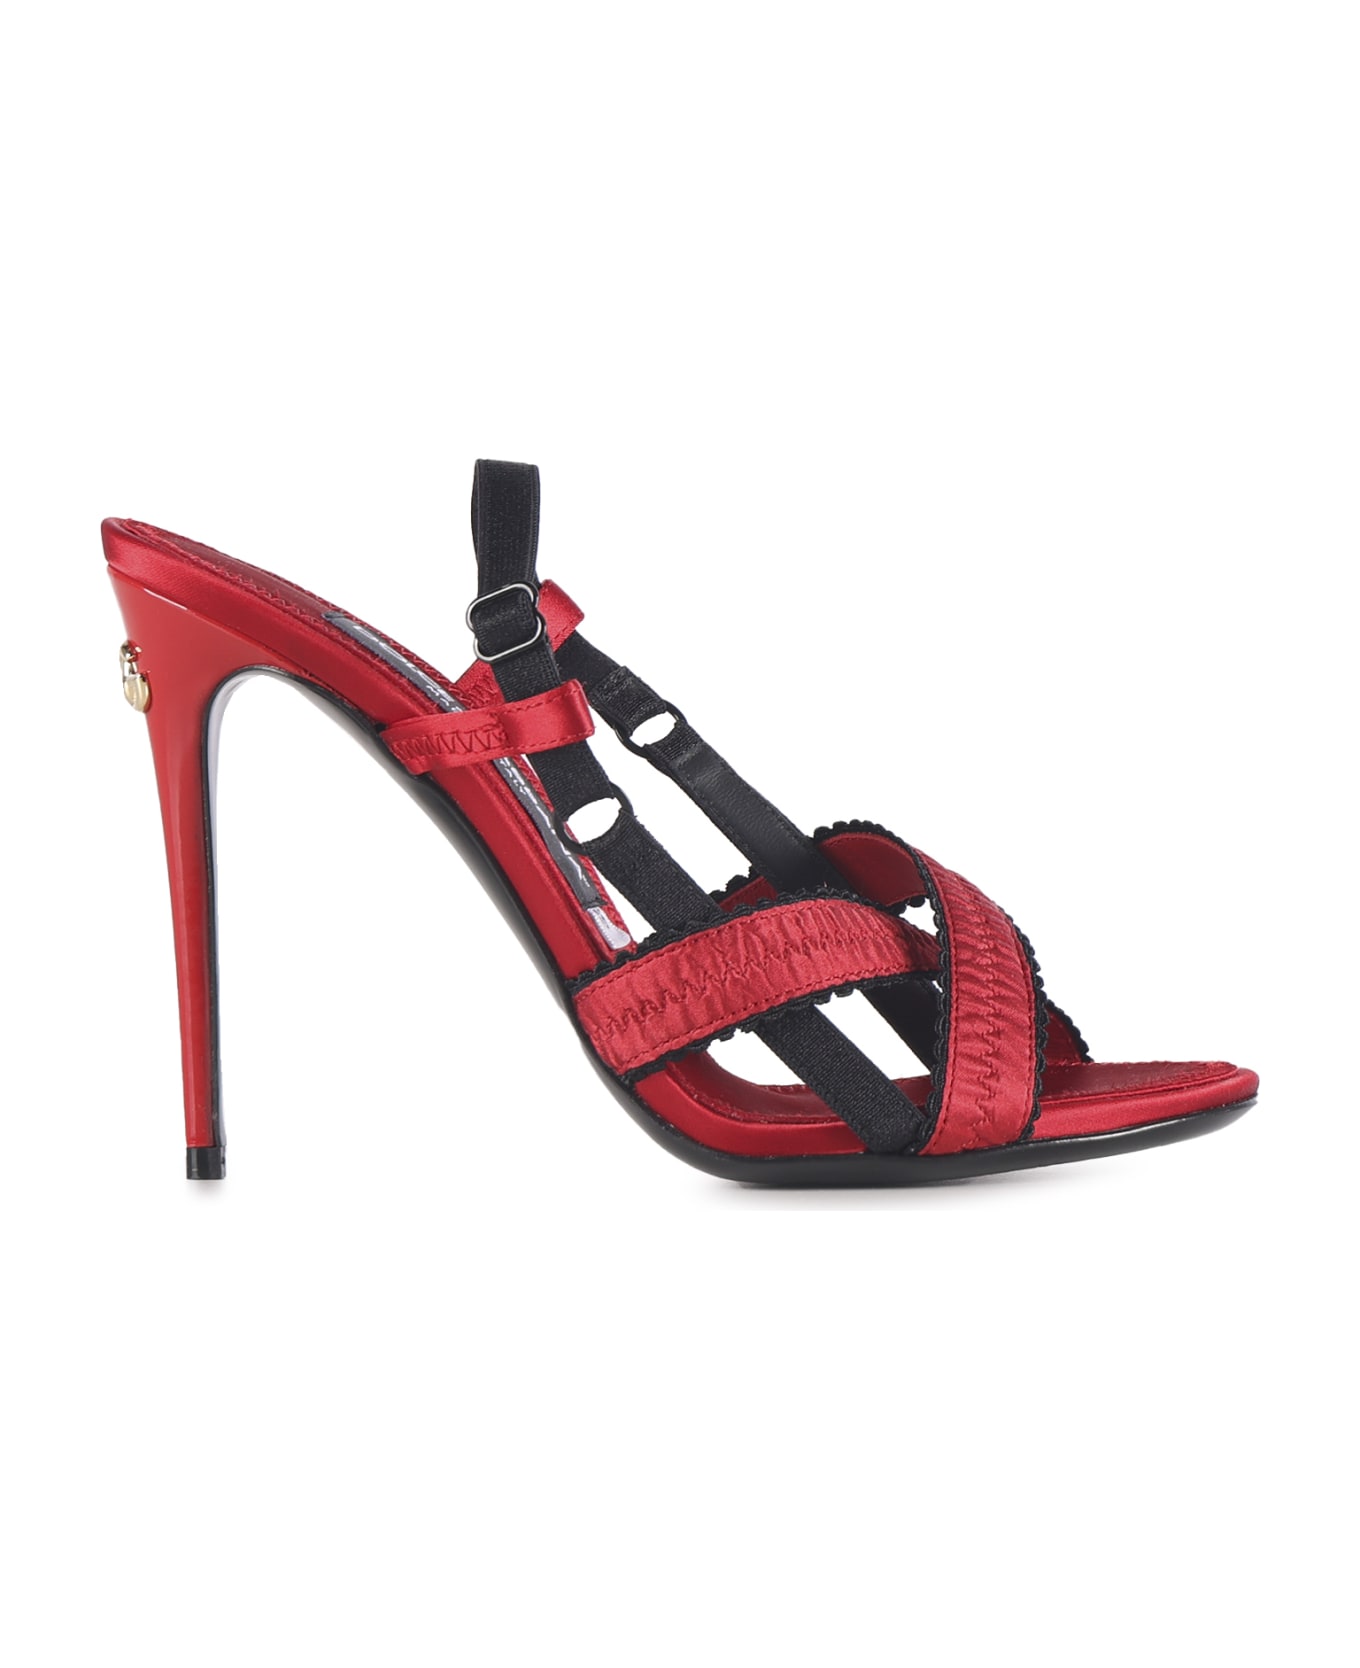 Dolce & Gabbana Corset-style Satin Sandals - Red, black